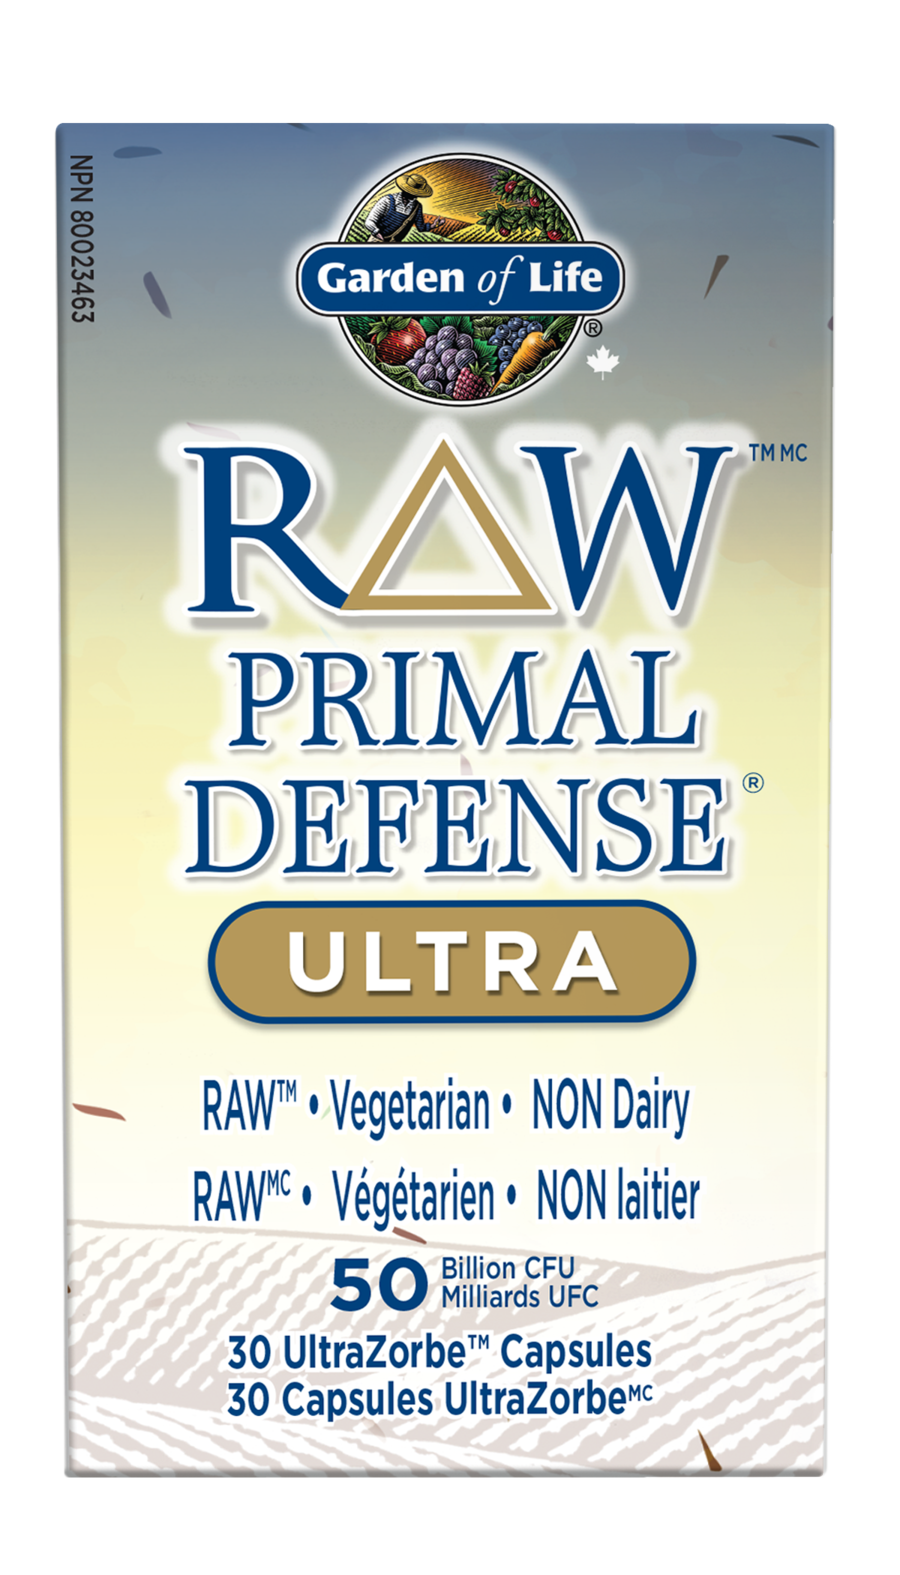 Garden of Life Raw Primal Defense Ultra